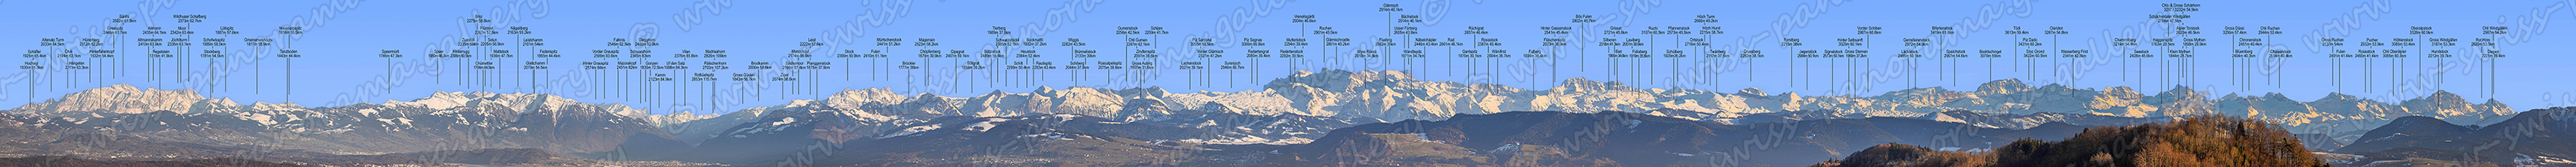 swiss panorama gallery Albis Pass Alpenpanorama beschriftet, Panorama Albis Pass Hohwacht Turm, 167 Gipfel,
Altenalp Turm 2033m 64.5km, Schäfler 1925m 65.4km, Säntis 2502m 61.9km, Girenspitz 2448m 61.7km, Hünerberg 2312m 62.2km, Hinterfallenkopf 1532m 54.4km, Öhrli  2194m 63.1km, Hängeten 2211m 63.3km, Moor 2342m 63.4km, Hochalp 1530m 55.3km, Regelstein 1315m 41.9km, Altmann 2435m 64.1km, Altmannskamm 2410m 63.9km, Wildhuser Schafberg 2373m 62.7km Schafwisspitz 1989m 58.5km, Jöchliturm 2336m 63.1km, Stockberg 1781m 54.5km, Hinterrugg 2306m 60.5km, Gmeinenwishöchi 1817 1818m 55.9km, Speer 1950m 46.3km, Speermürli 1746m 47.3km, Lütispitz 1987m 57.6km, Tanzboden 1443m 44.4km, Neuenalpspitz1816m 55.5km, Chümettler 1704m 44.5km, Federispitz 1865m 44.4km, Mattstock 1936m 47.7km, Zuestoll 2235m 59km, Brisi 2279m 58.8km, Glattchamm 2079m 54.5km, Frümsel 2267m 57.5km, Nägeliberg 2163m 55.2km, Leistchamm 2101m 54km, Selun 2205m 56.9km, Falknis 2546m 62.5km, Vorder Grauspitz 2599m 83.6km, Mazorakopf 2451m 82km, Mazorakopf 2451m 82km, Madrisahorn 2826m 109km, Gross Güslen 1843m 56.7km, Rotbüelspitz 2853m 115.7km, Rätschenhorn 2703m 107.2km, Kamm 2123m 84.9km, Vilan 2376m 85.8km, Uf den Satz 1998m 84.3km, Gonzen 1830m 72.5km, Glegghorn 2450m 83.9km, Schwarzhorn 2345m 83km, Sächsmoor 2196m 57.4km, Planggenstock1675m 37.9km, Ziger 2074m 58.6km, Brodkamm 2006m 59.6km, Leist 2222m 57.6km, Brückler 1777m 38km, Bützistock 2489m 55.4km, Gipsgrat 2407m 59.1km, Tierberg 1989m 37.8km, Schwarzstöckli 2385m 52.1km, Bützistock 2489m 55.4km, Söligrat 1858m 39.2km, Stock 2390m 50.9km, Mürtschenstock 2441m 51.2km, Chöpfenberg 1879m 30.9km, Heustock 2384m 52.4km, Bockmattli 1932m 37.2km, Wiggis 2282m 43.5km, Brünnelistock 2133m 39km, Chli Gumen 2247m, Zindlenspitz 2097m 38.6km, Lachenstock 2027m 39.1km, Gross Aubrig 1695m 31.6km, Schijen 2259m 41.7km, Rossalpelispitz 2075m 38.8km, Schiberg 2044m 37.8km, Rautispitz 2283m 43.4km, Fulen 2410m 51.1km, Schilt 2299m 50.4km, Brückler 1777m 38km, Piz Sardona 3055m 66.5km, Piz Segnas 3099m 66.8km, Redertenstock 2292m 39.5km, Vorder Glärnisch 2327m 47.2km, Surenjoch 2946m 66.7km, Wyss Rössli 2018 m,  Fluebrig 2092m 35km, Glärnisch 2914m 46.1km, Bächistock 2914m 46.1km, Usser Fürberg 2605m 43.9km, Rad 2661m 46.1km, Näbelchäpler 2446m 43.4km, Wändlispitz 1971m 34.7km, Surenjoch 2946m 66.7km, Glärnischnadle 2861m 45.2km, Ruchen 2901m 45.5km, Vrenelisgärtli 2904m 46.6km, Bös Fulen 2802m 45.7km, Hinter Gassenstock 2541m 45.4km, Fläschenspitz 2073m 36.9km, Lorem Ipsum, Grisset 2721m 45.8km, Silberen 2318m 41.3km, Biet 1965m 34.6km, Fulberg 1934m 36.4km, Gantspitz, Rossstock 2387m 45.4km, Gantspitz 1970m 30.1km, Mutteristock 2294m 39.4km, Rüchigrat 2657m 46.4km, Signalstock 2573m 50.1km, Hinter Selbsanft 3029m 60.1km, Vorder Schiben 2987m 60.8km, Tödi 3613m 59.4km, Clariden 3267m 54.8km, Piz Dado 3431m 60.2km, Wasserberg First 2341m 42.3km, Stoc Grond 3422m 60.5km, Bocktschingel 3079m 55km, Speichstock 2967m 54.6km, Bifertenstock 3419m 61.8km, Gemsfairenstock 2972m 54.9km, Läckistock 2486m 50.1km, Gross Sternen 1969m 37.2km,, Jegerstöck 2584m 50.1km, Forstberg 2215m 38km, Druesberg 2282m 38.1km, Twäriberg 2117m 37.5km, Lauiberg 2057m 38.6km, Fidisberg 1919m 35.8km, Ruchi 3107m 60.3km, Höchturm 2666m 49.2km, Höch Hund 2215m 38.7km, Pfannenstock 2573m 45.5km, Ortstock 2716m 50.4km, Schülberg 1929m36.2km, Chammliberg 3214m 54.4km, Haggenspitz 1763m 28.5km, Schächentaler Windgällen 2764m 47.5km, Chli Schärhorn 3232m 54.6km, Alpler Torstock 2620m 46.5km, Gross Düssi 3256m 57.4km, Chli Ruchen 2944m 53.4km, Chronenstock 2451m 40.4km, Pucher 2932m 53.9km, Fulen 2491m 41.4km, Gross Ruchen 3137m 54km, Rossstock 2460m 41.4km, Oberalpstock 3328m 60.9km, Höhlenstock 3085m 53.4km, Chli Windgällen2987m 54.2km, Rot Horn 2820m 53.5km, Diepen 2221m 39.4km, Gross Windgällen 3187m 53.3km, Hundstock 2212m 39.7km, Chli Oberälpler 3085m 60.3km, Chaiserstock 2514m 40.4km, Blüemberg 2404m 40.3km, Gross Mythen 1898m 29.9km, Klein Mythen 1844m 28.7km, Seestock 2428m 45.6km
